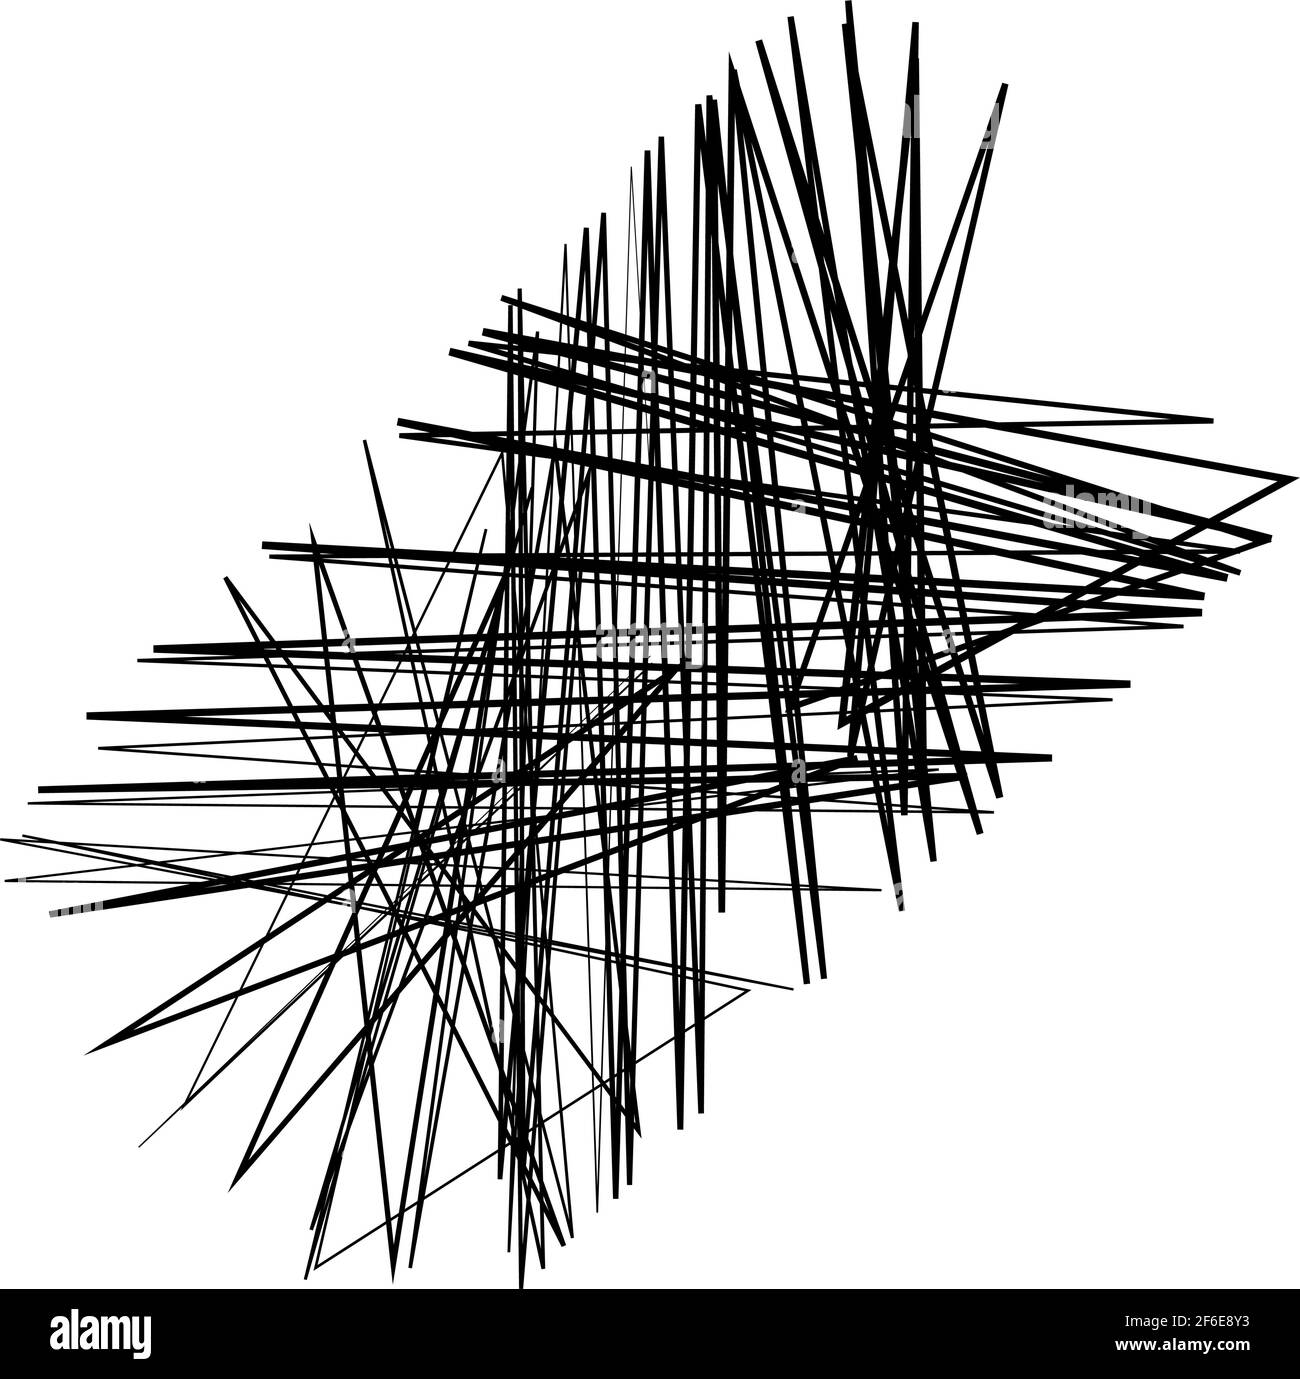 https://c8.alamy.com/comp/2F6E8Y3/abstract-edgy-geometric-line-art-angular-random-chaotic-lines-spiky-tapered-chaotic-art-irregular-artistic-element-2F6E8Y3.jpg